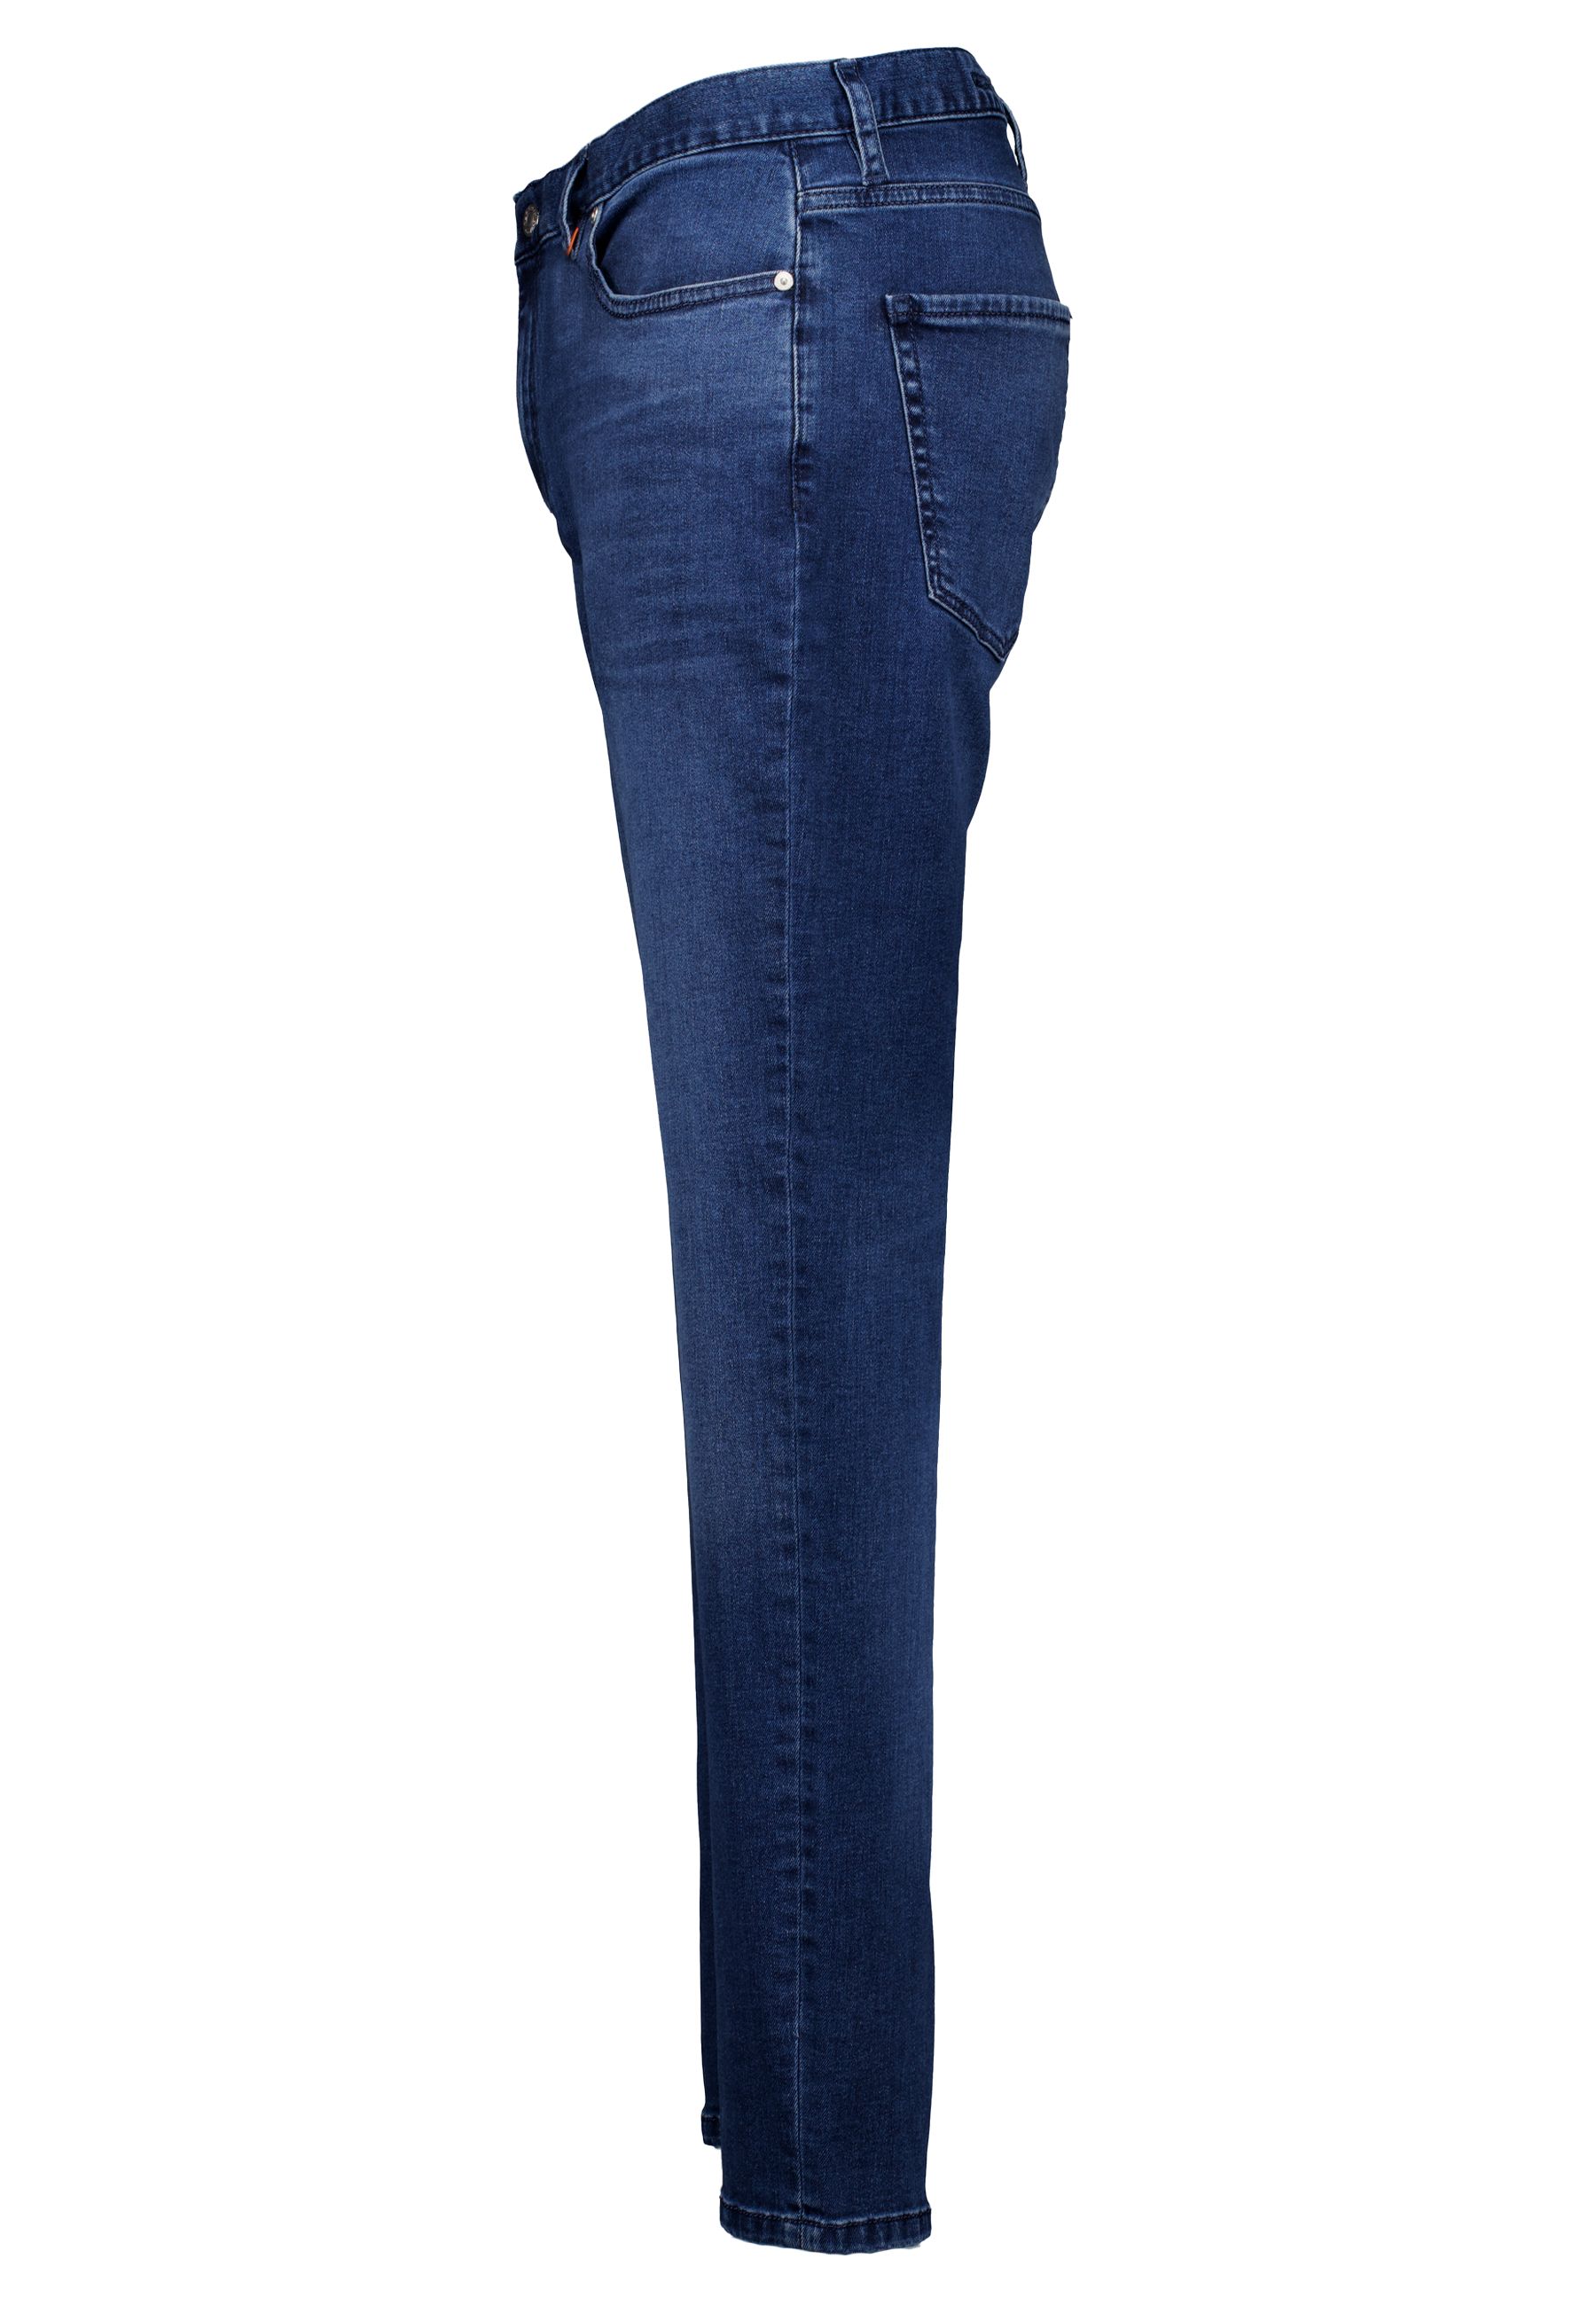 Super Stretch Pantalons Blauw 4237 1973